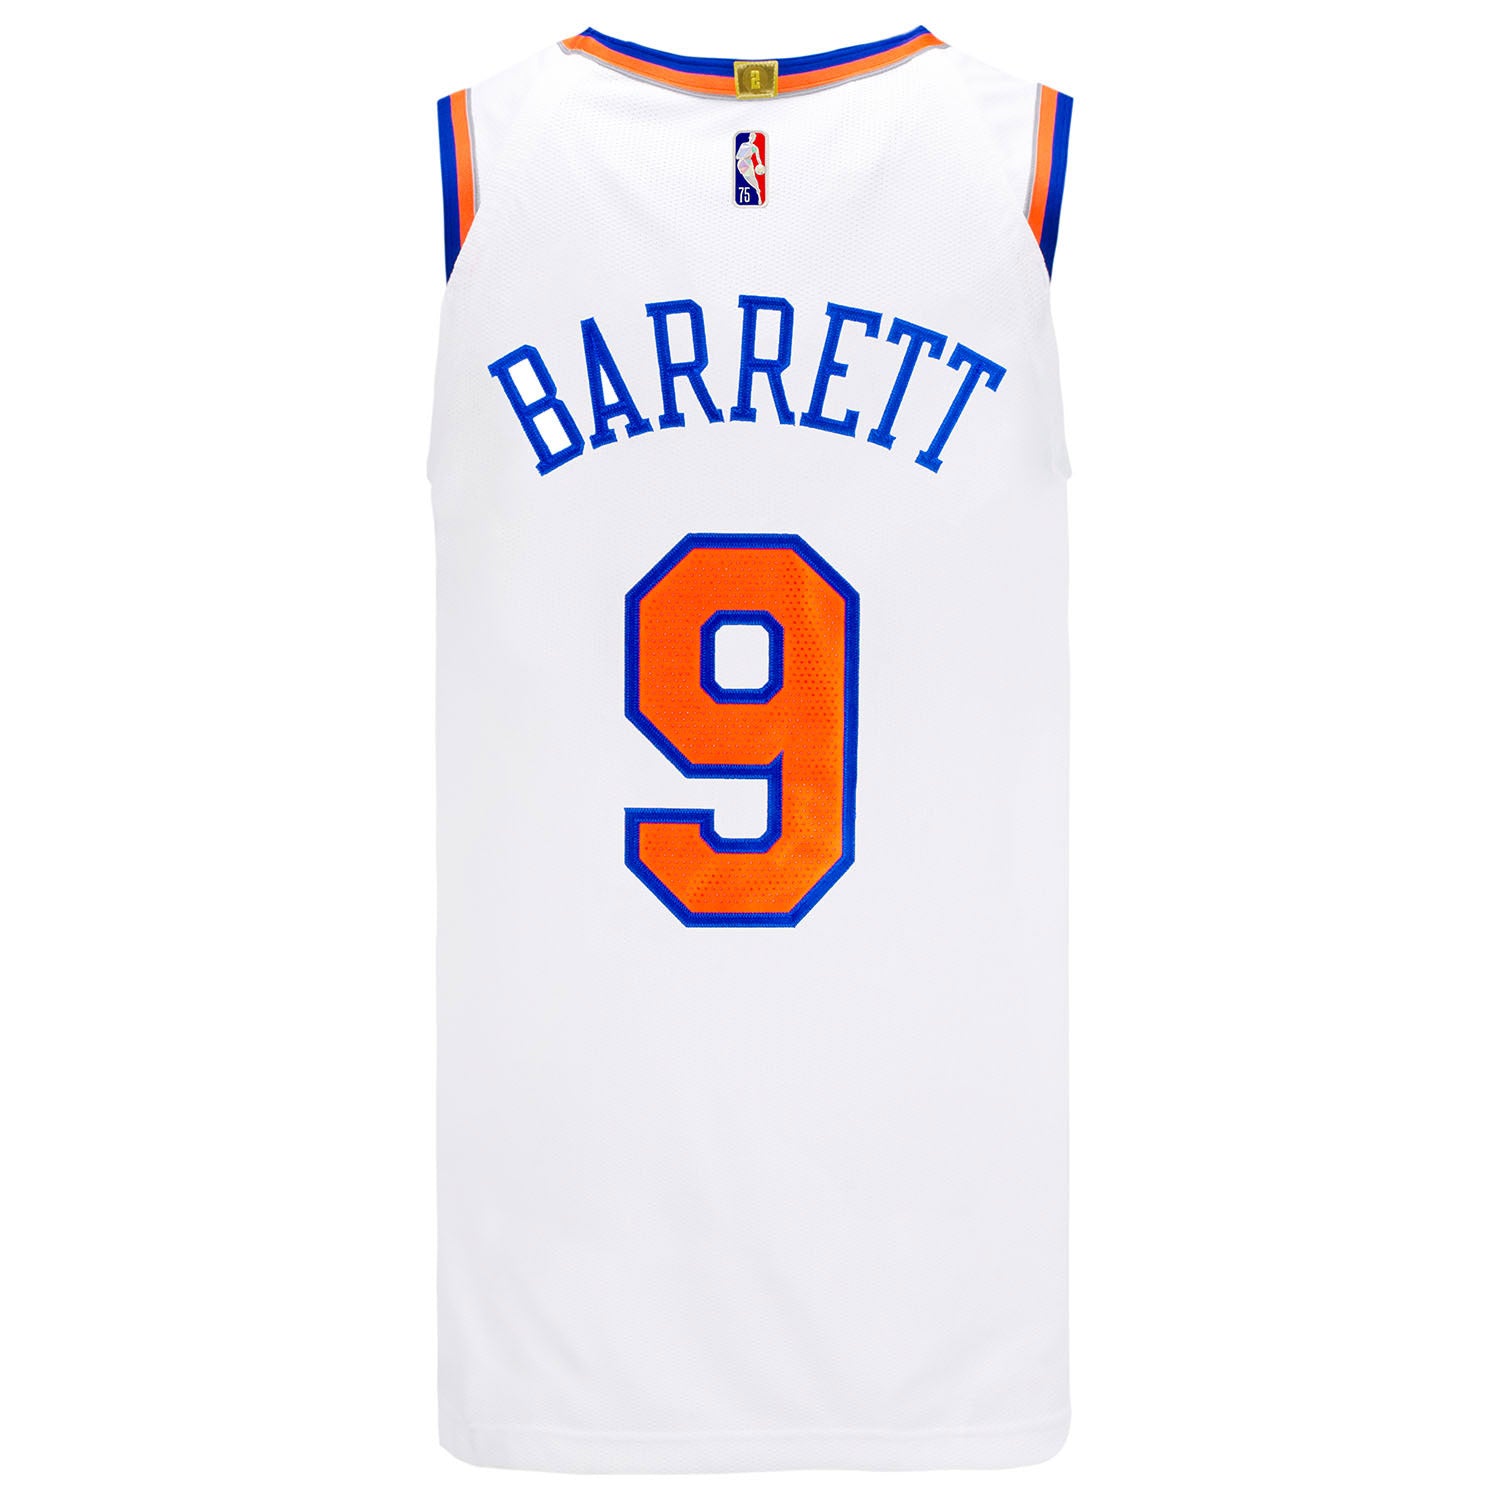 New York Knicks Nike Association Edition Swingman Jersey 22/23 - White - RJ  Barrett - Unisex